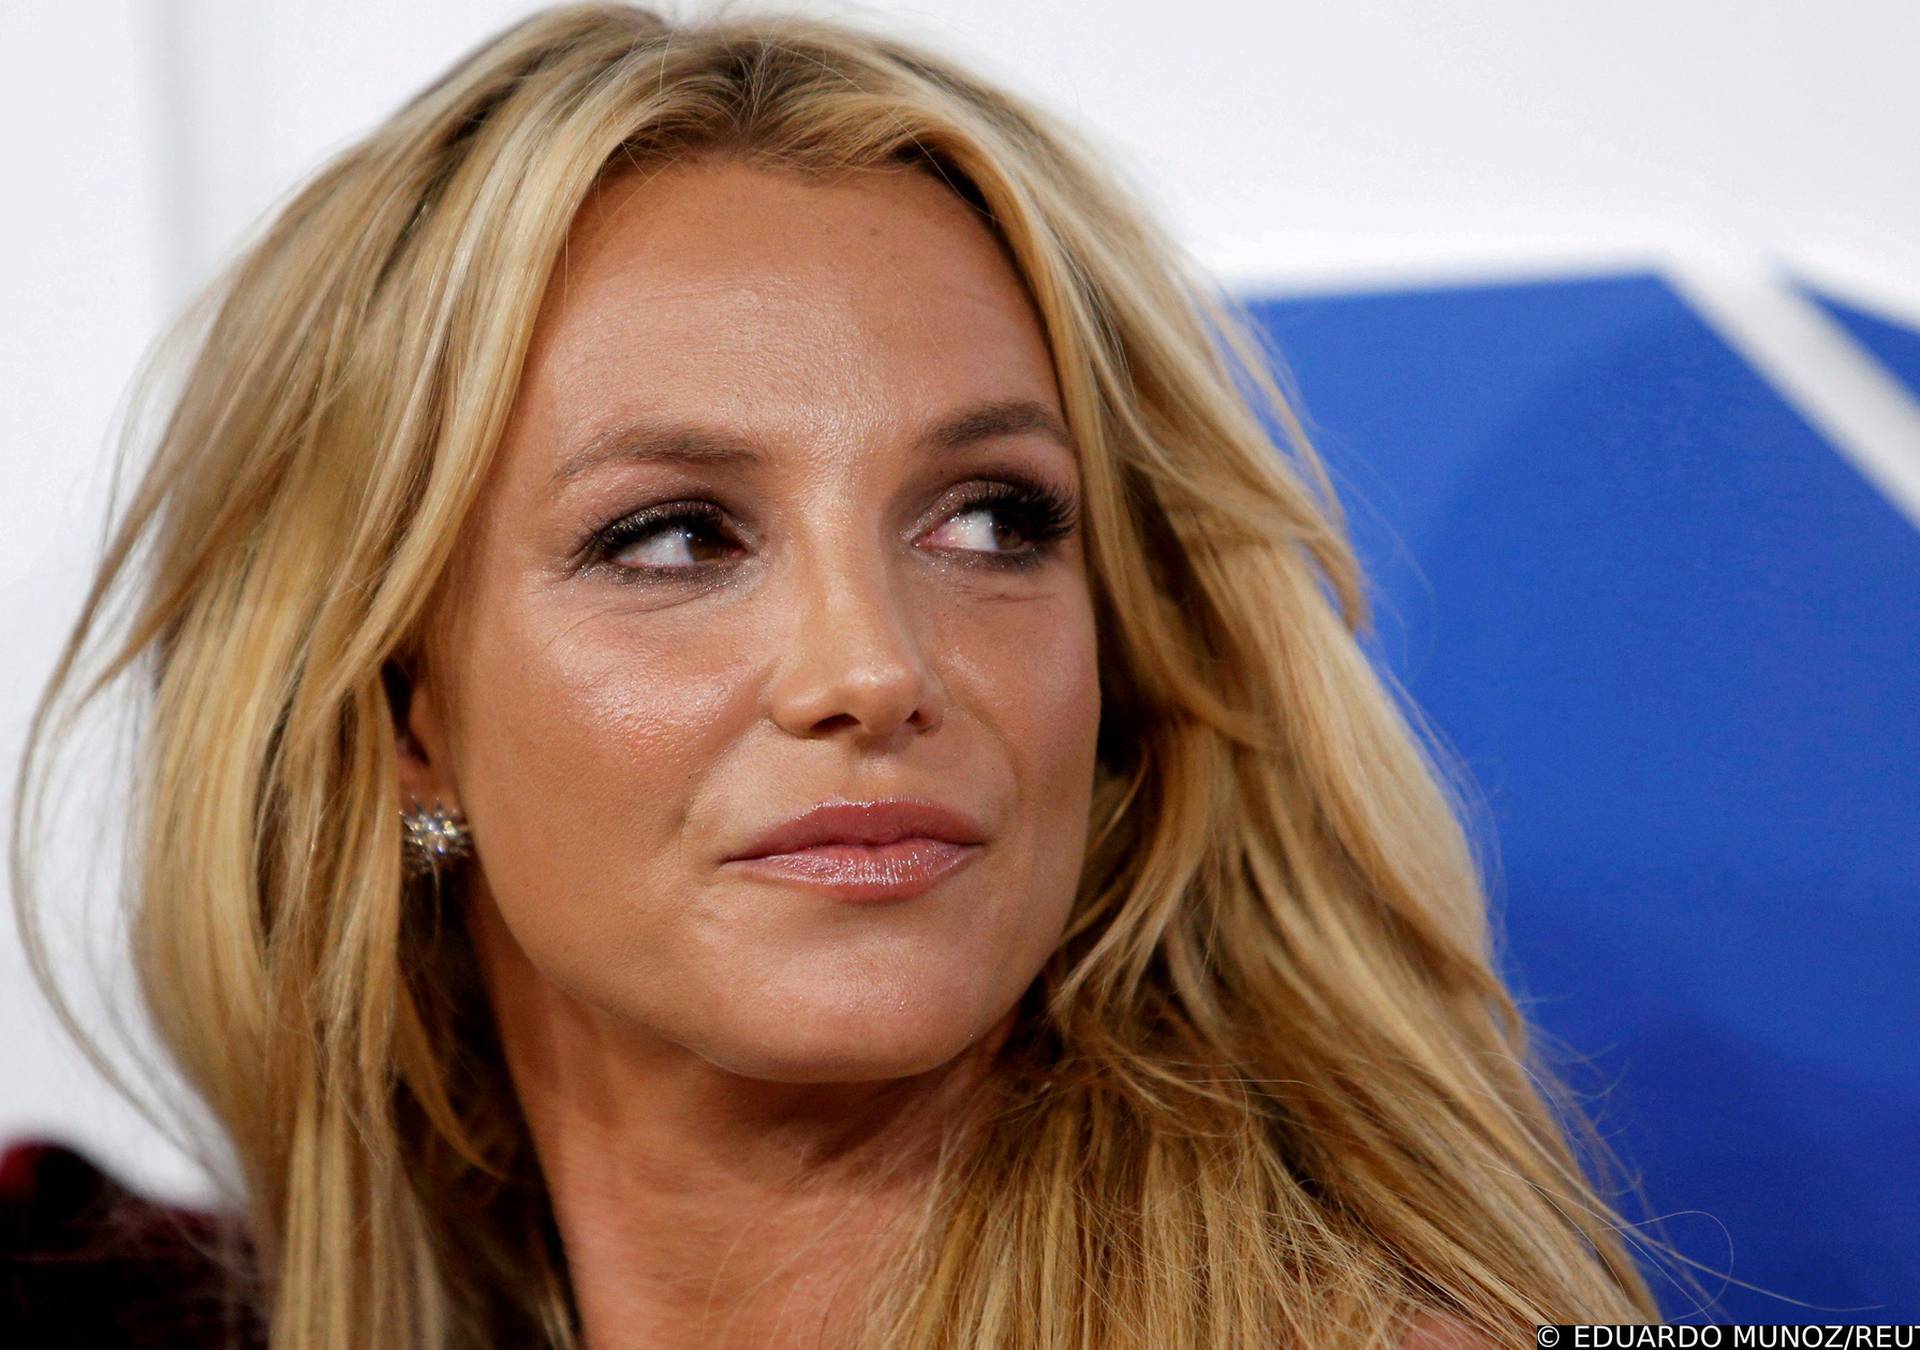 Novi šok za pratitelje Britney Spears: 'Promijenila sam ime'